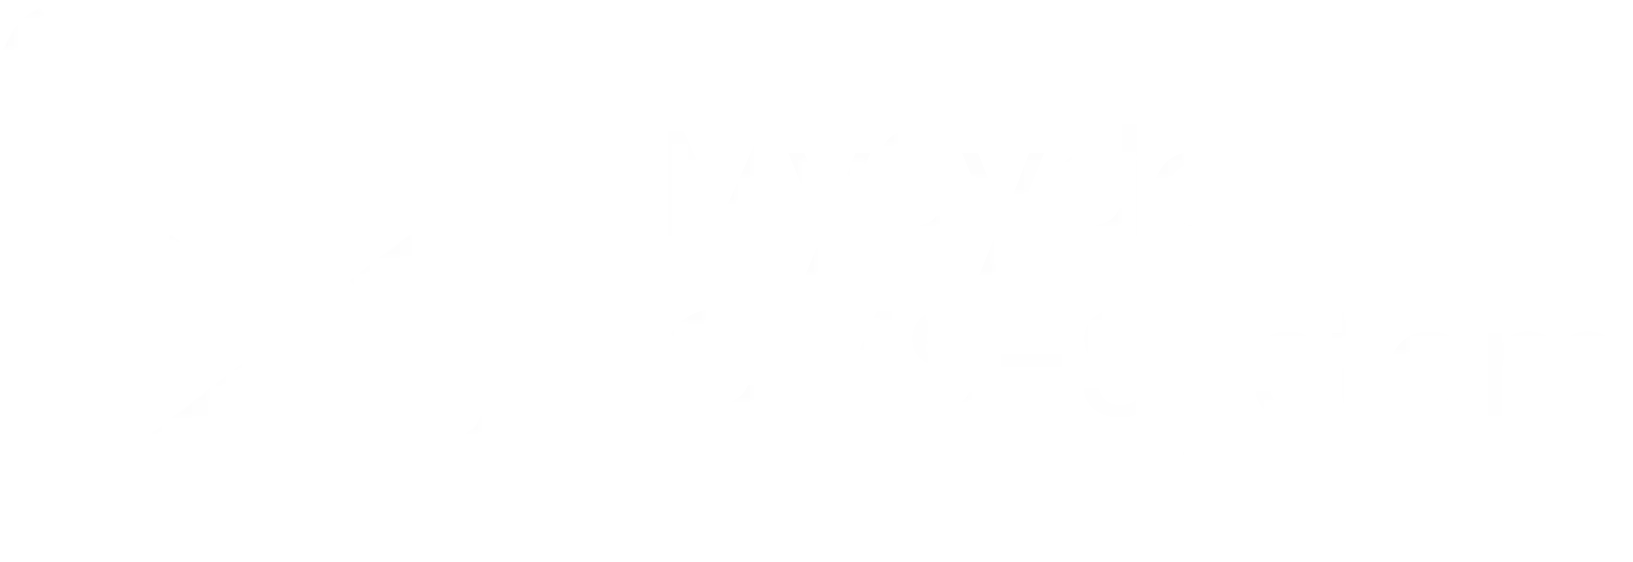 21_26_mysyde_cms-system_-_gro.webp